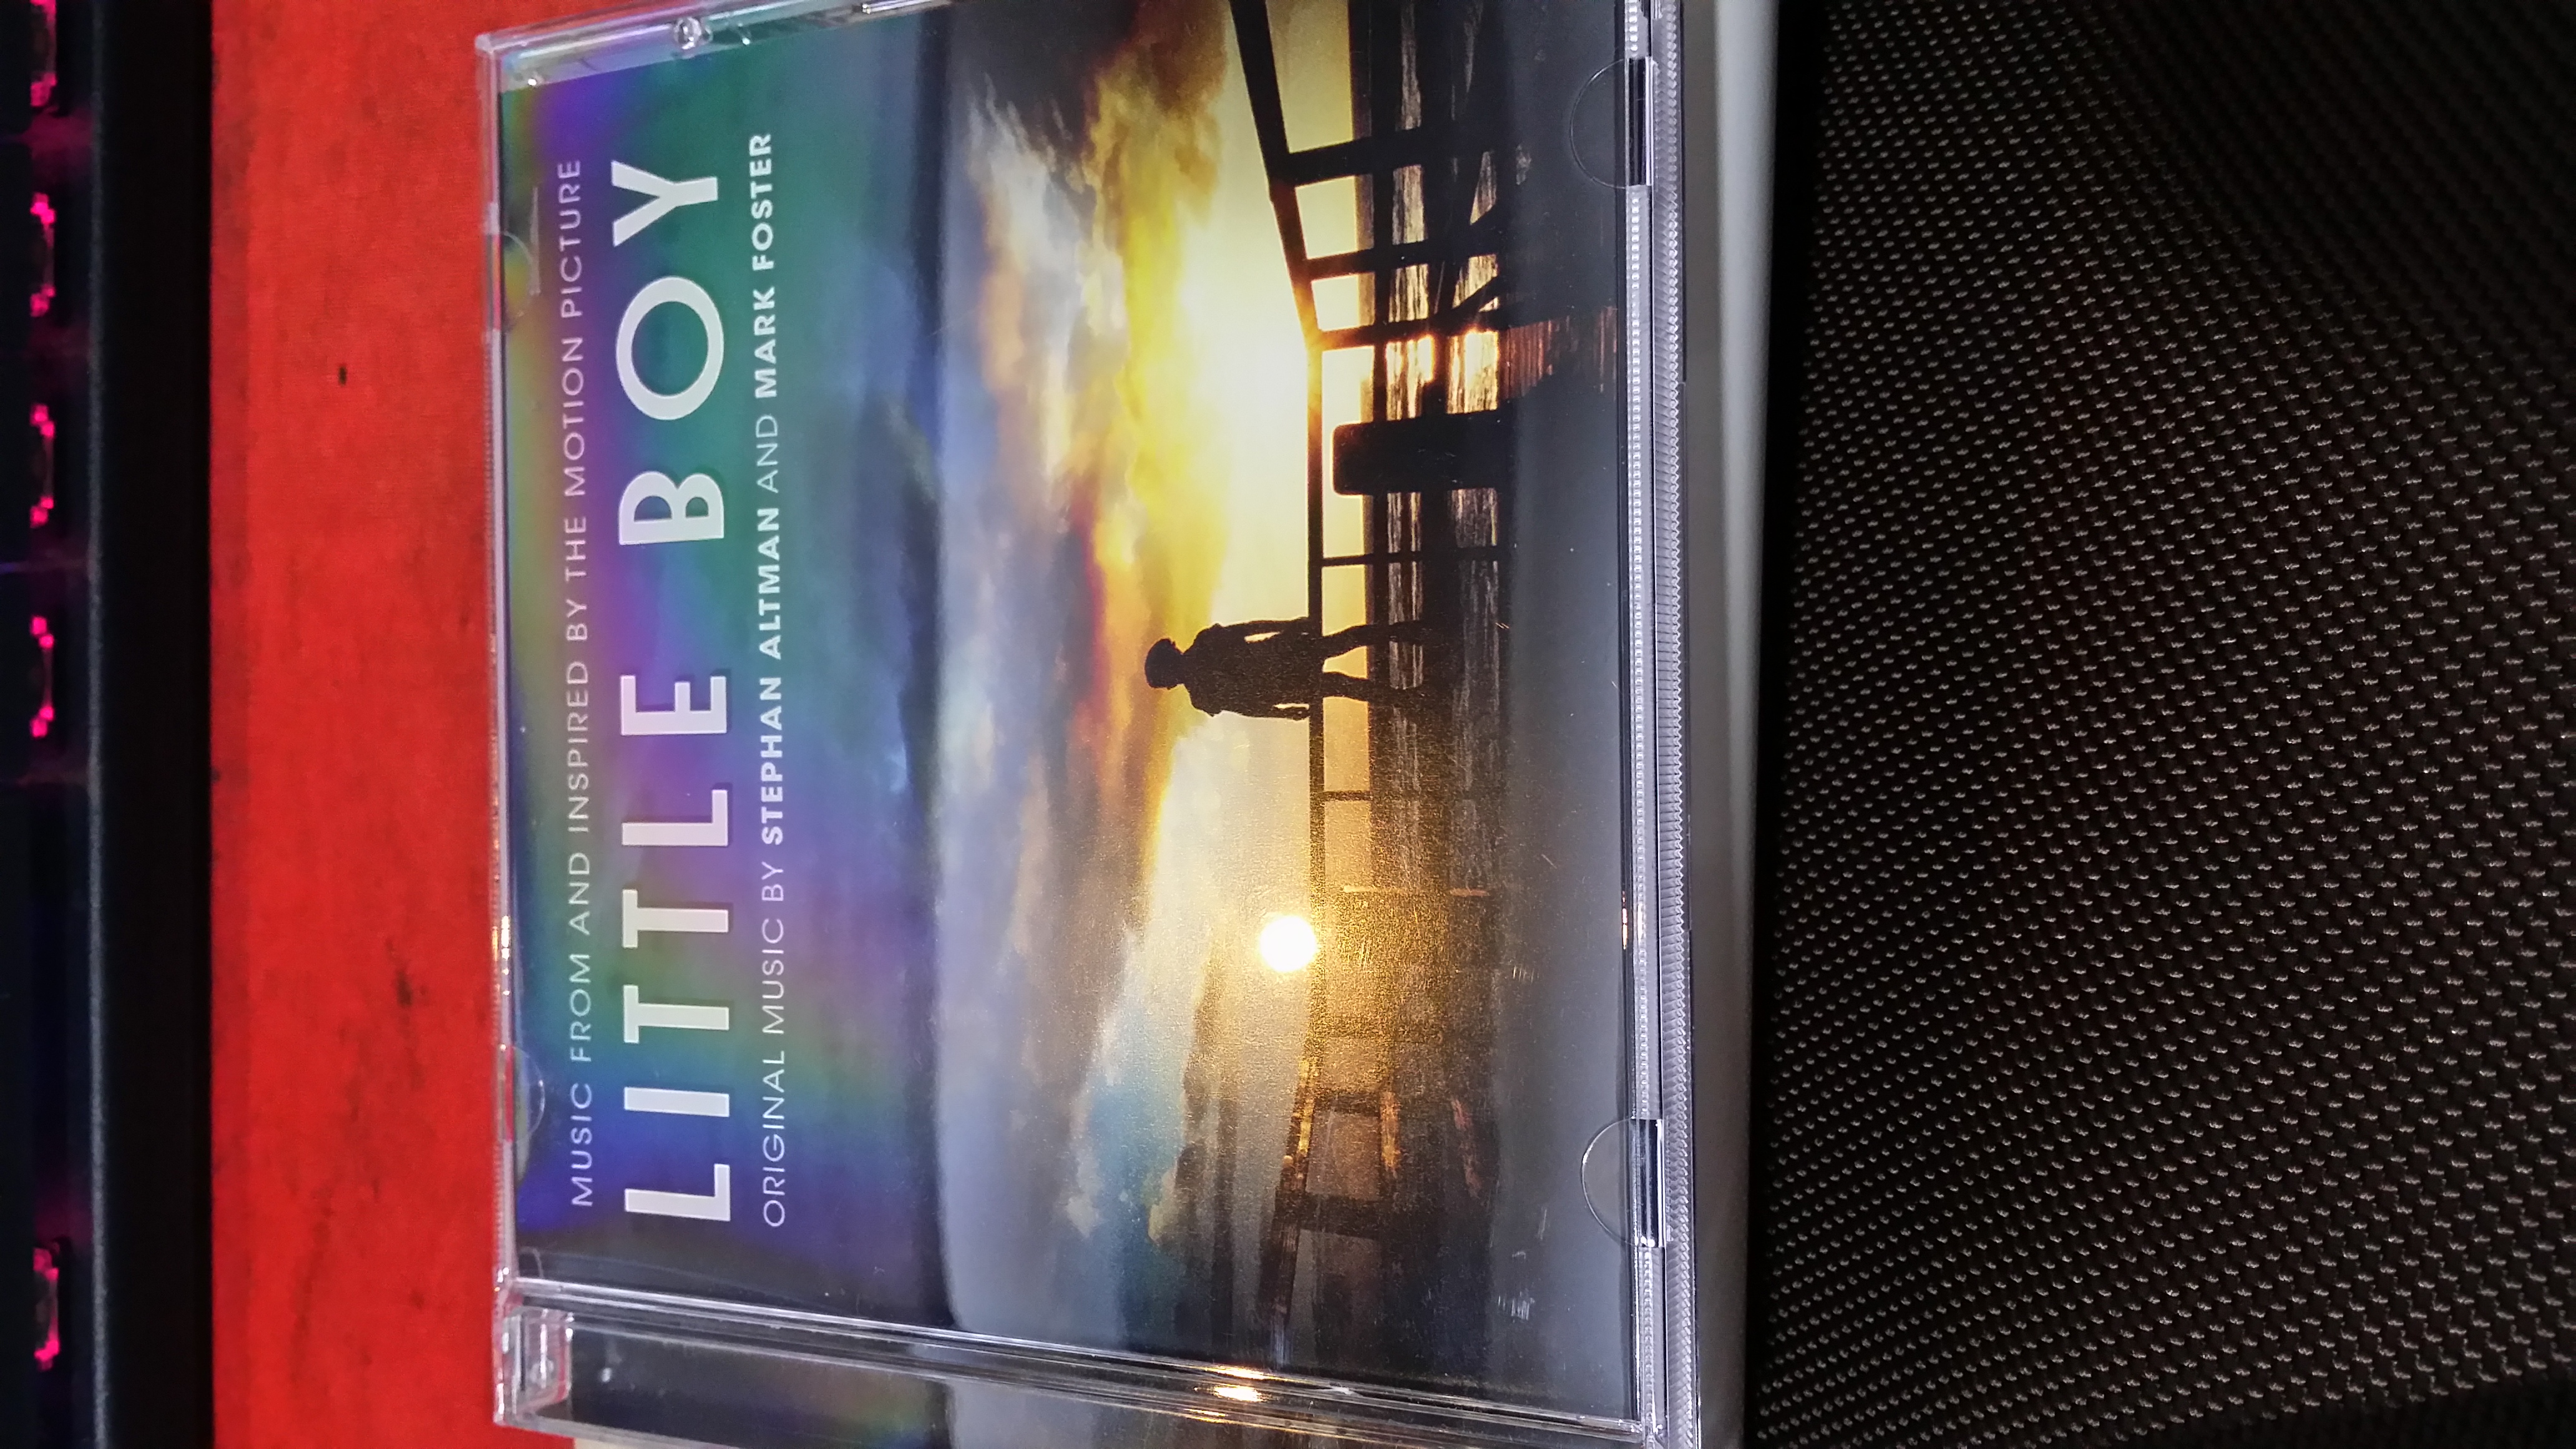 Stephan Altman/Mark Foster - Little Boy (리틀 보이) (Soundtrack)(CD)